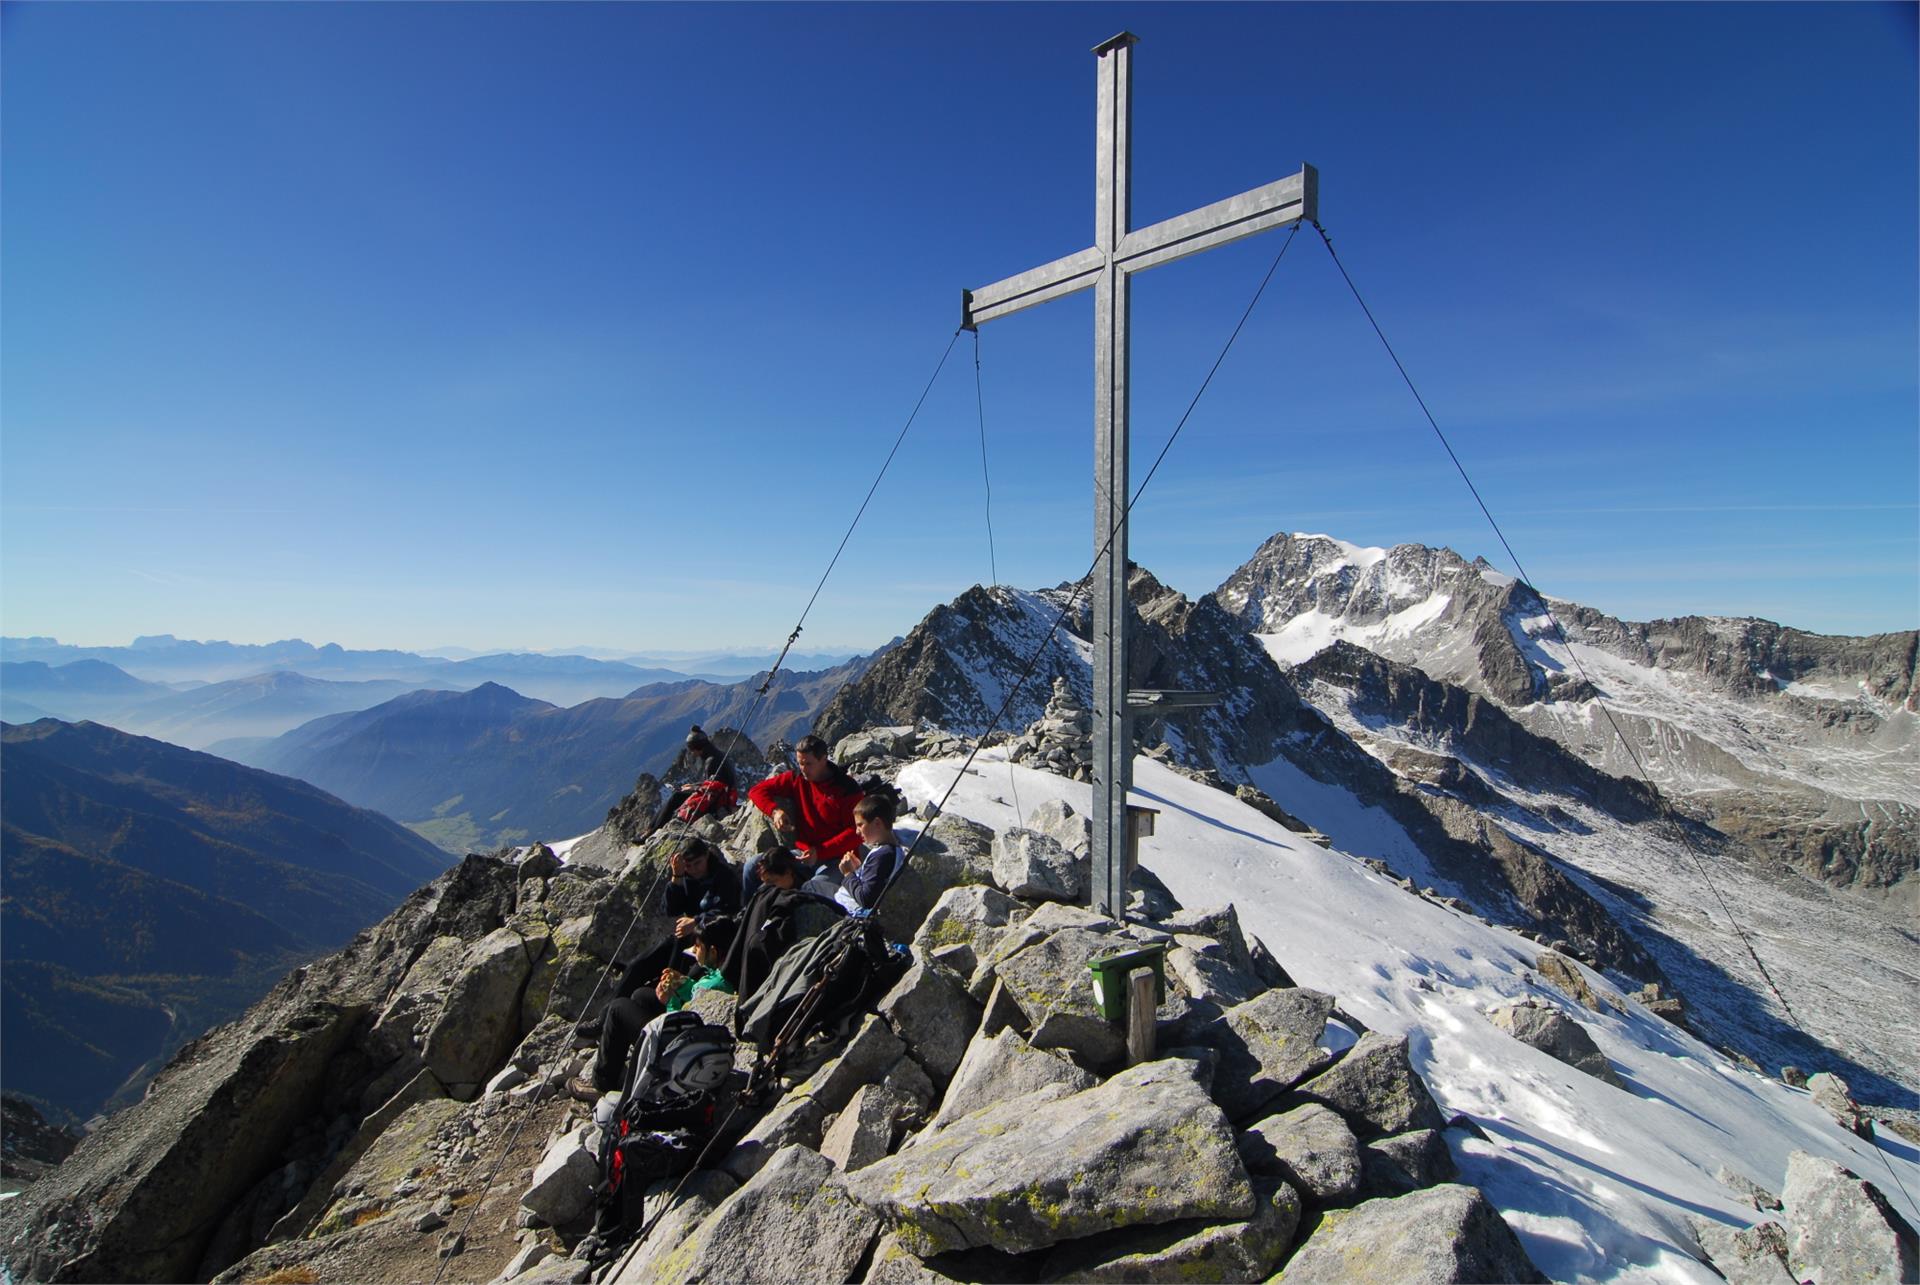 Jägerscharte 2.870m - Mount Almerhorn 2.986m - Barmerhütte hut 2.610m